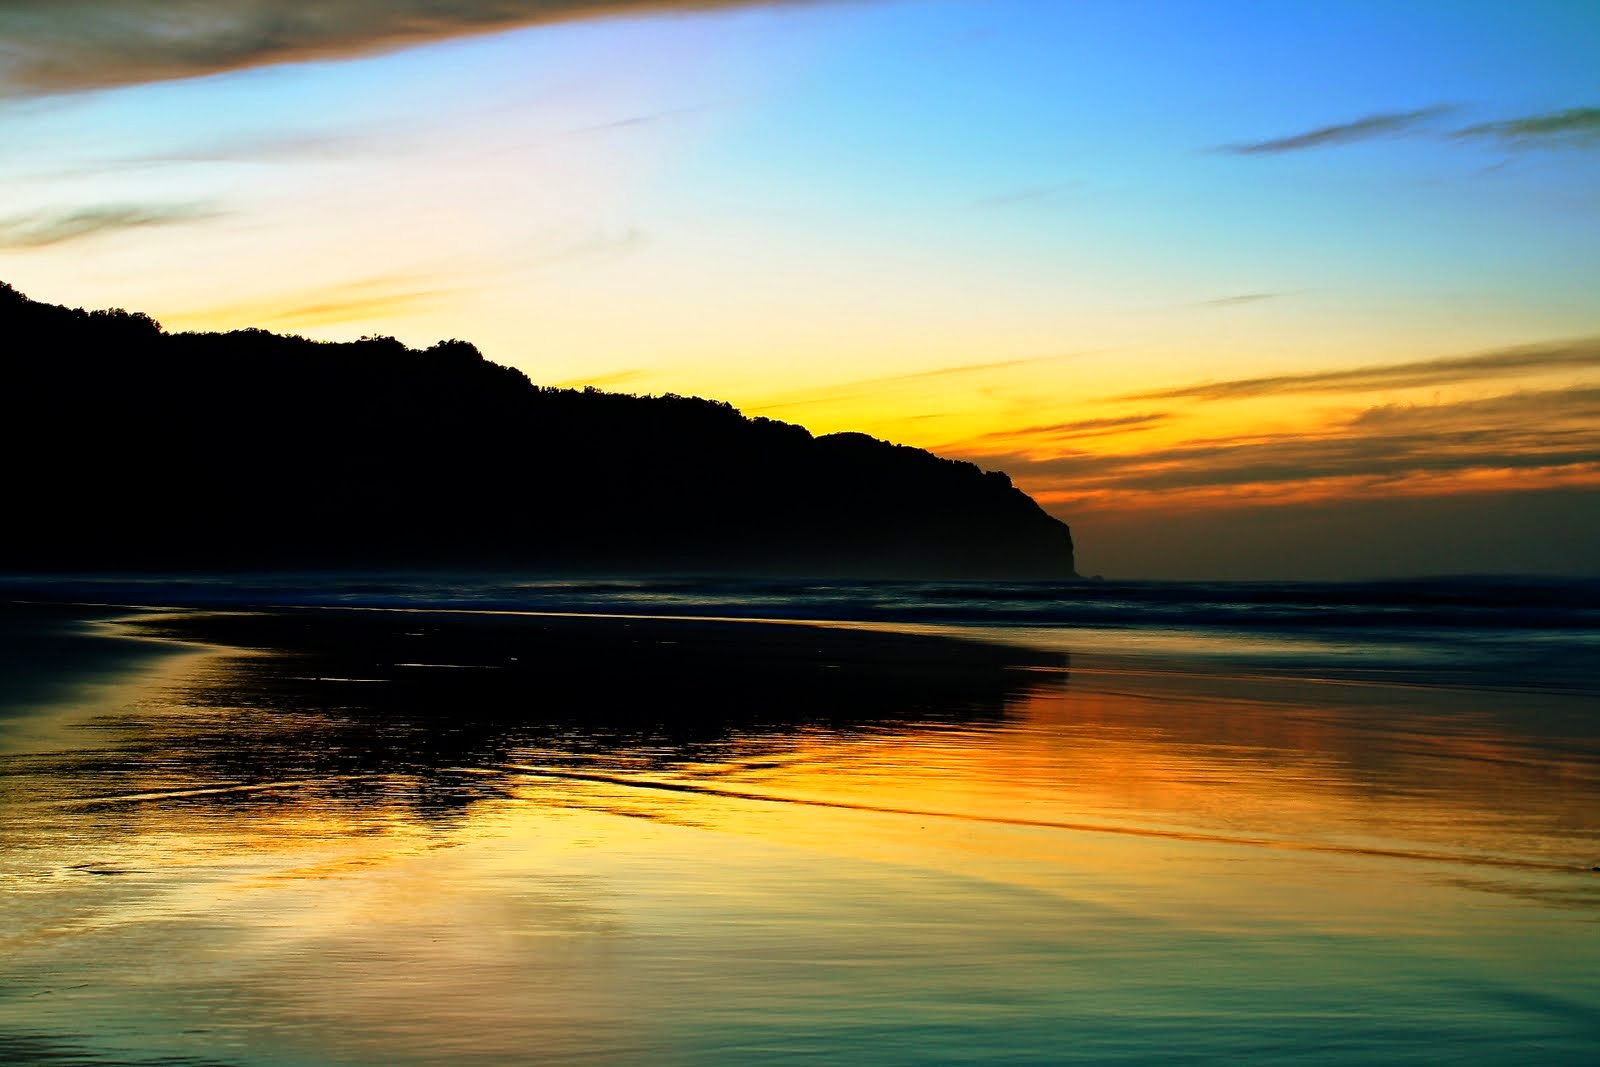 Bali Indonesia Holiday Travels: Parangtritis Beach, A Romantic Sunset